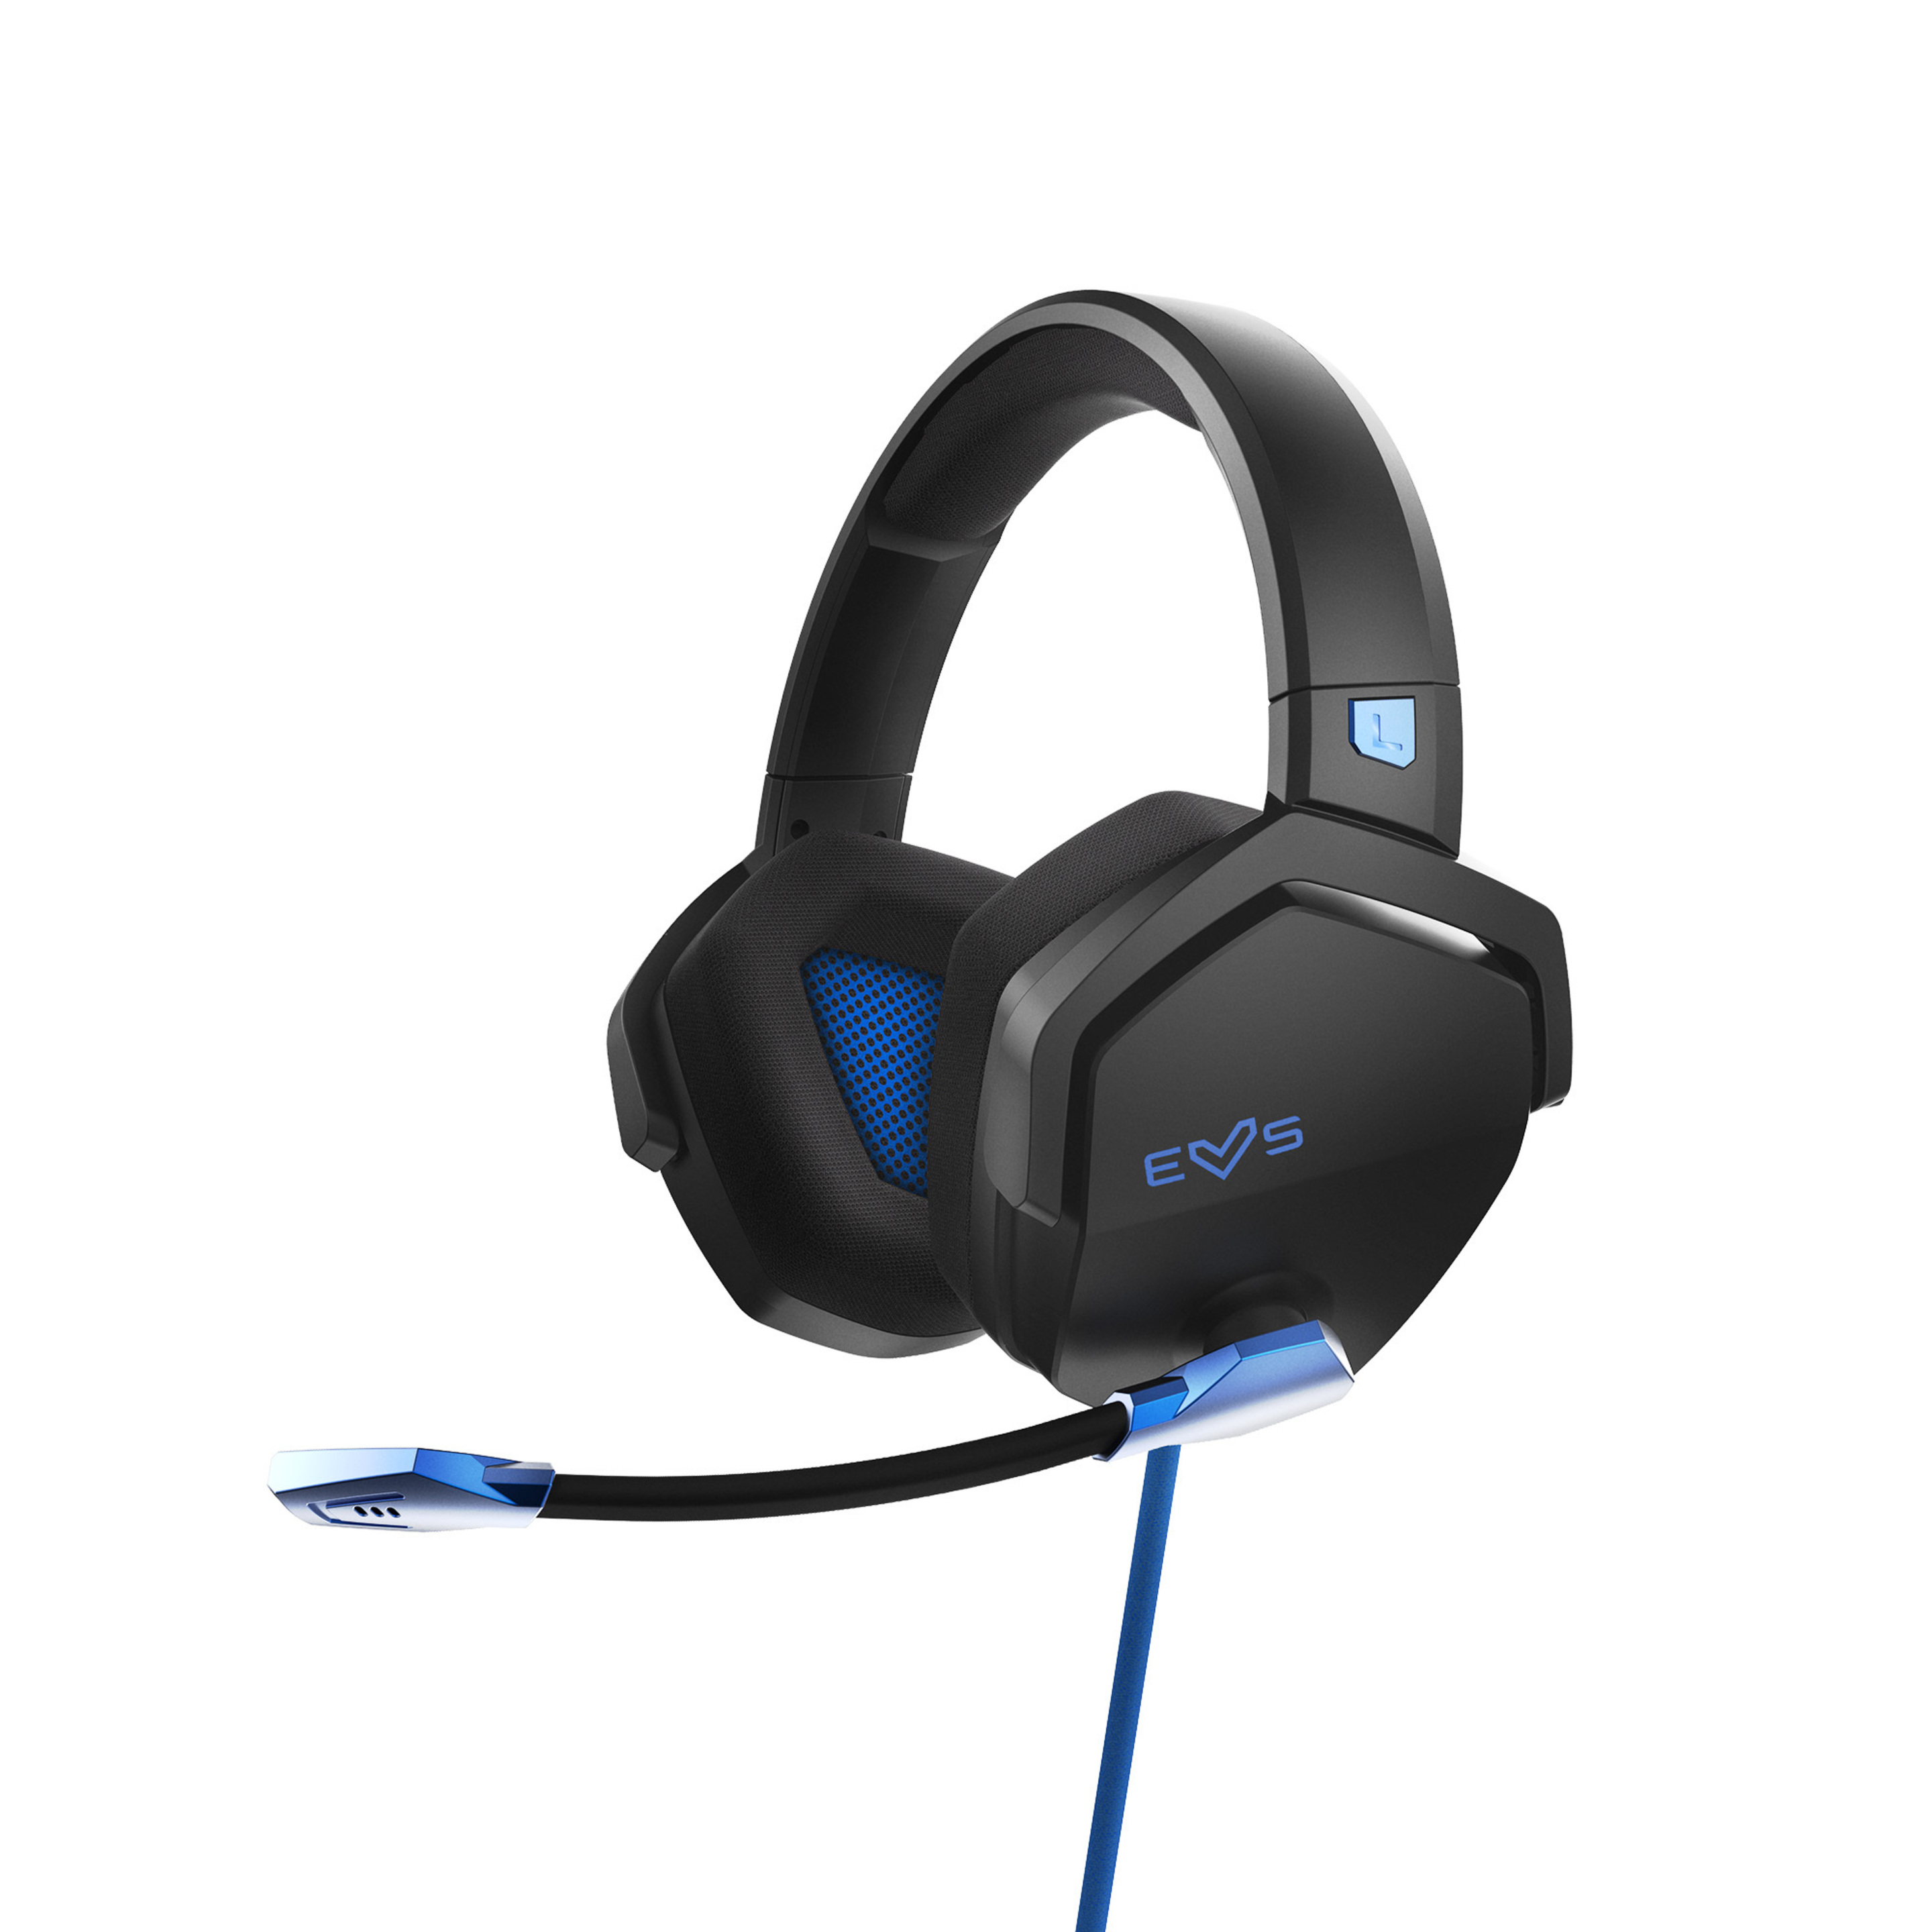 Auscultadores  Gaming Headset Esg 3 Blue Thunder (Deep Bass, Cloth Ear Pads, Crystal Clear Sound)